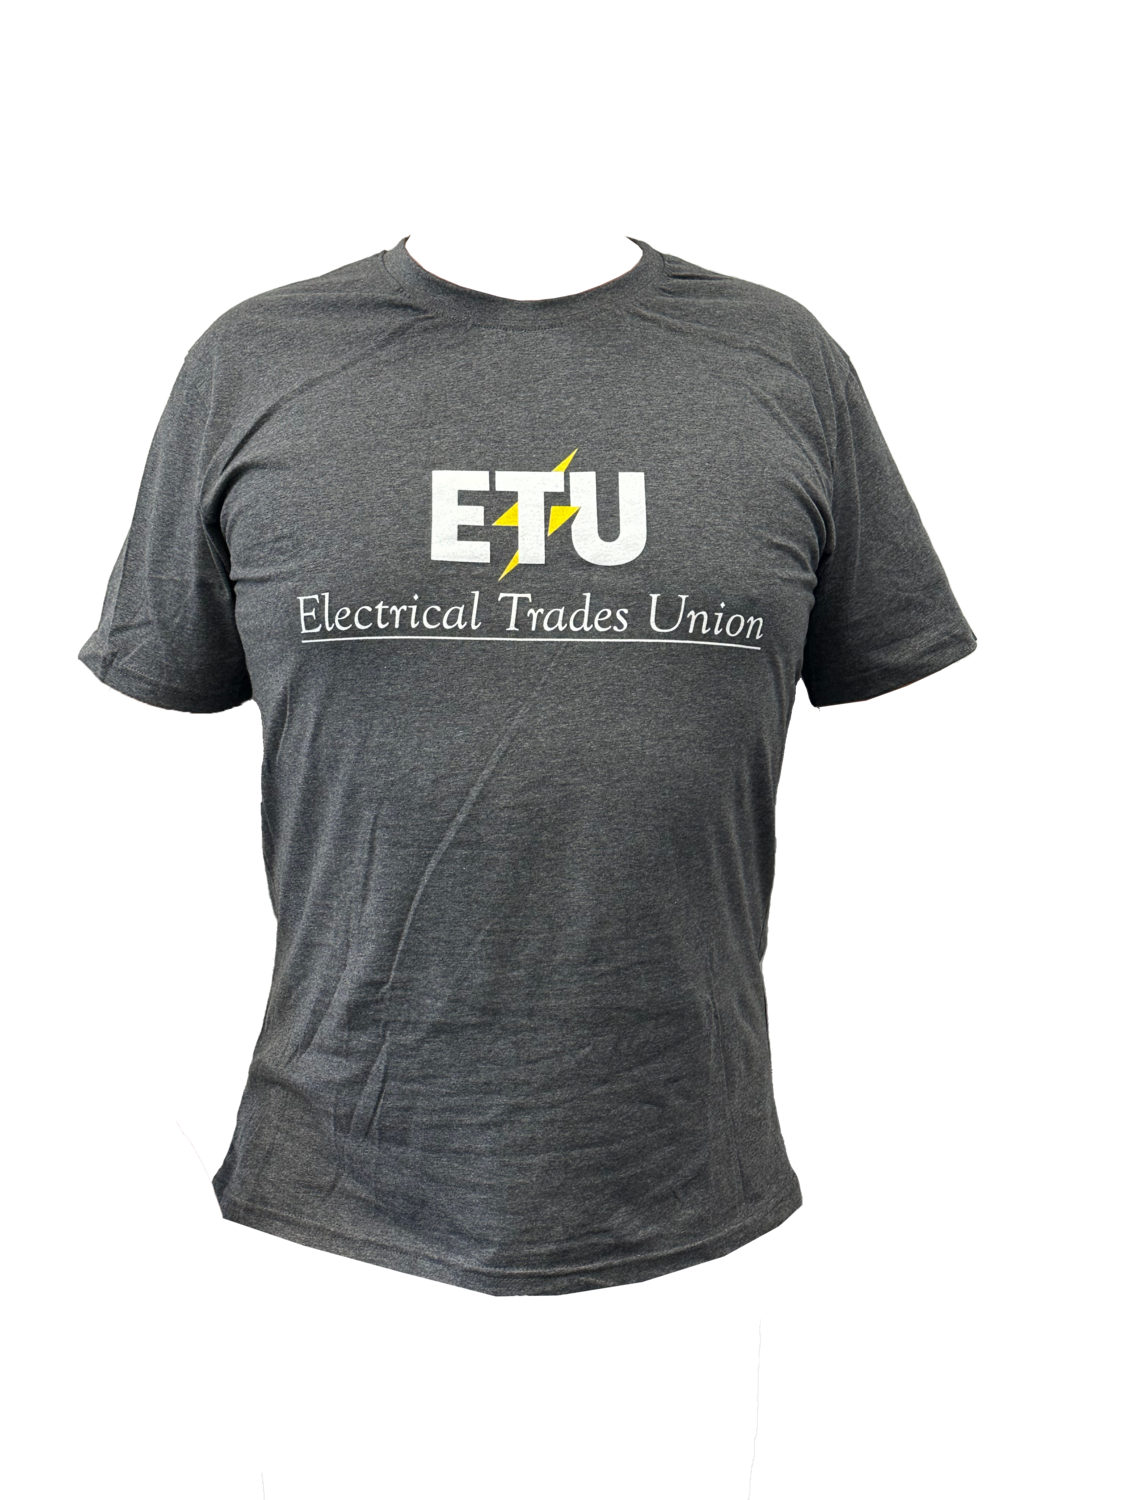 ETU T-Shirt - Grey